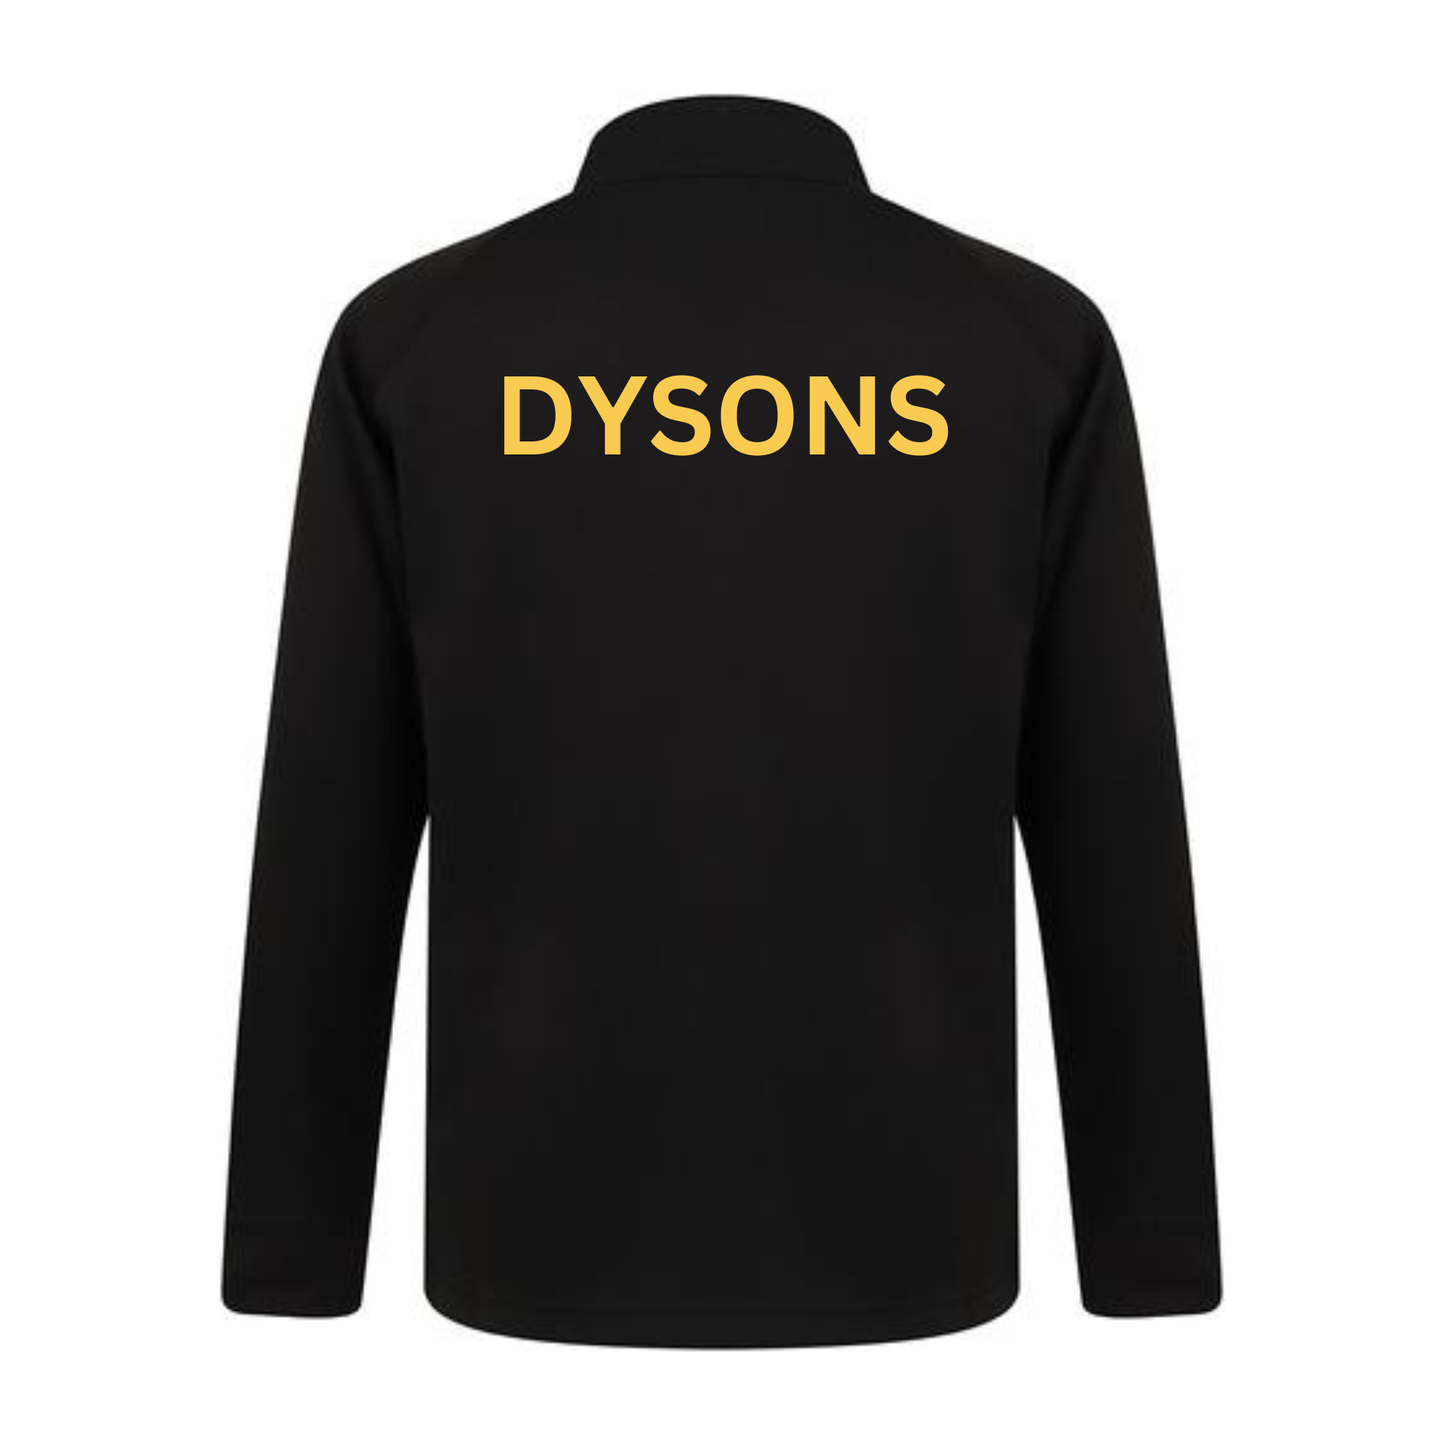 Dysons Coach Team Wear Tracksuit Set Black - Gold Logo